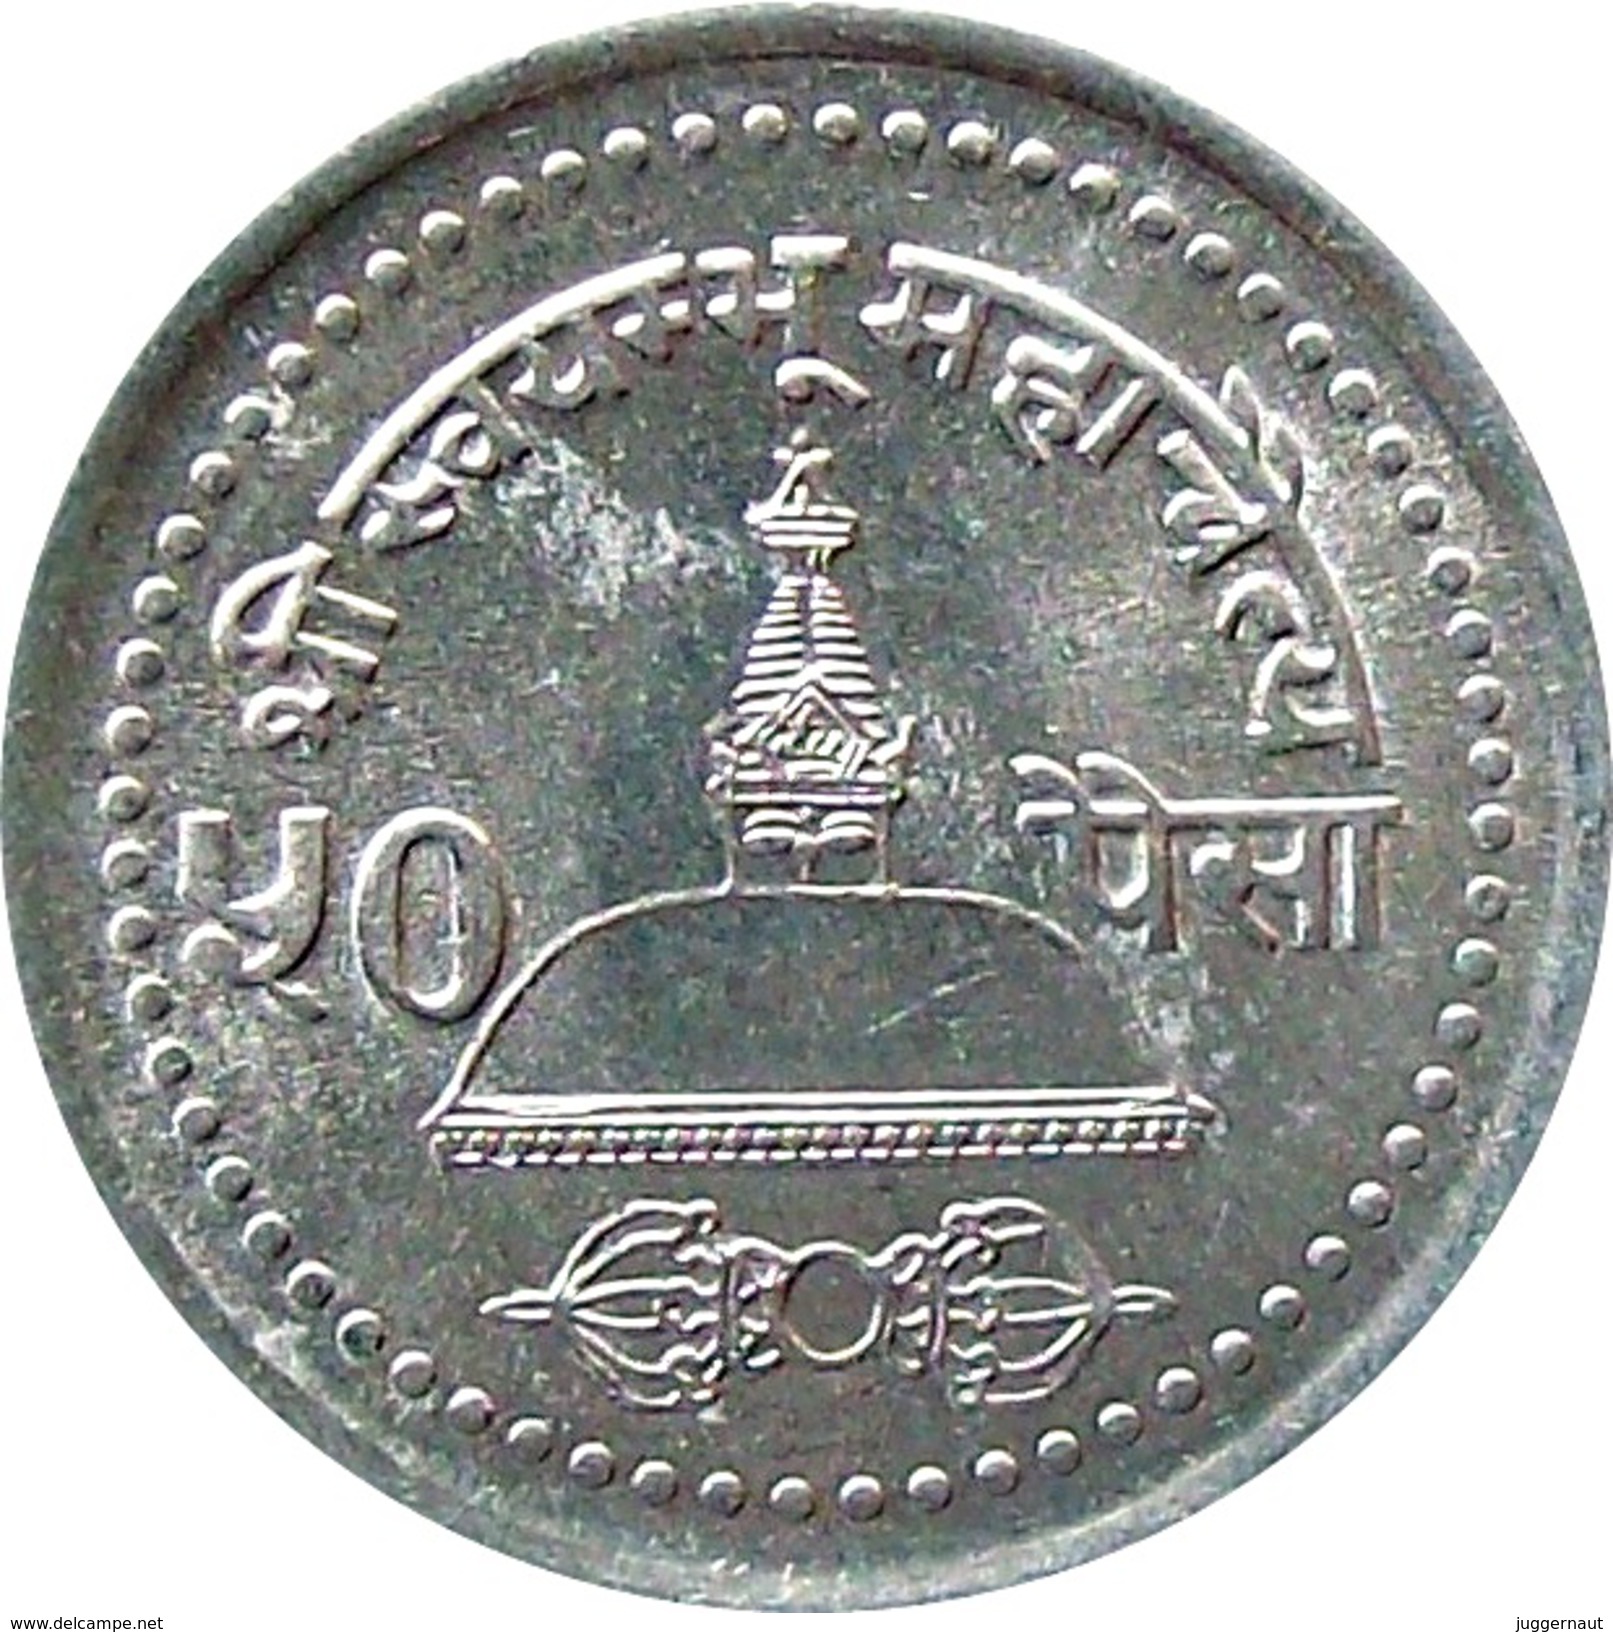 NEPAL 50 PAISA SWAYAMBHUNATH TEMPLE ALUMINUM COIN NEPAL 2002 KM-1149 UNCIRCULATED UNC - Nepal